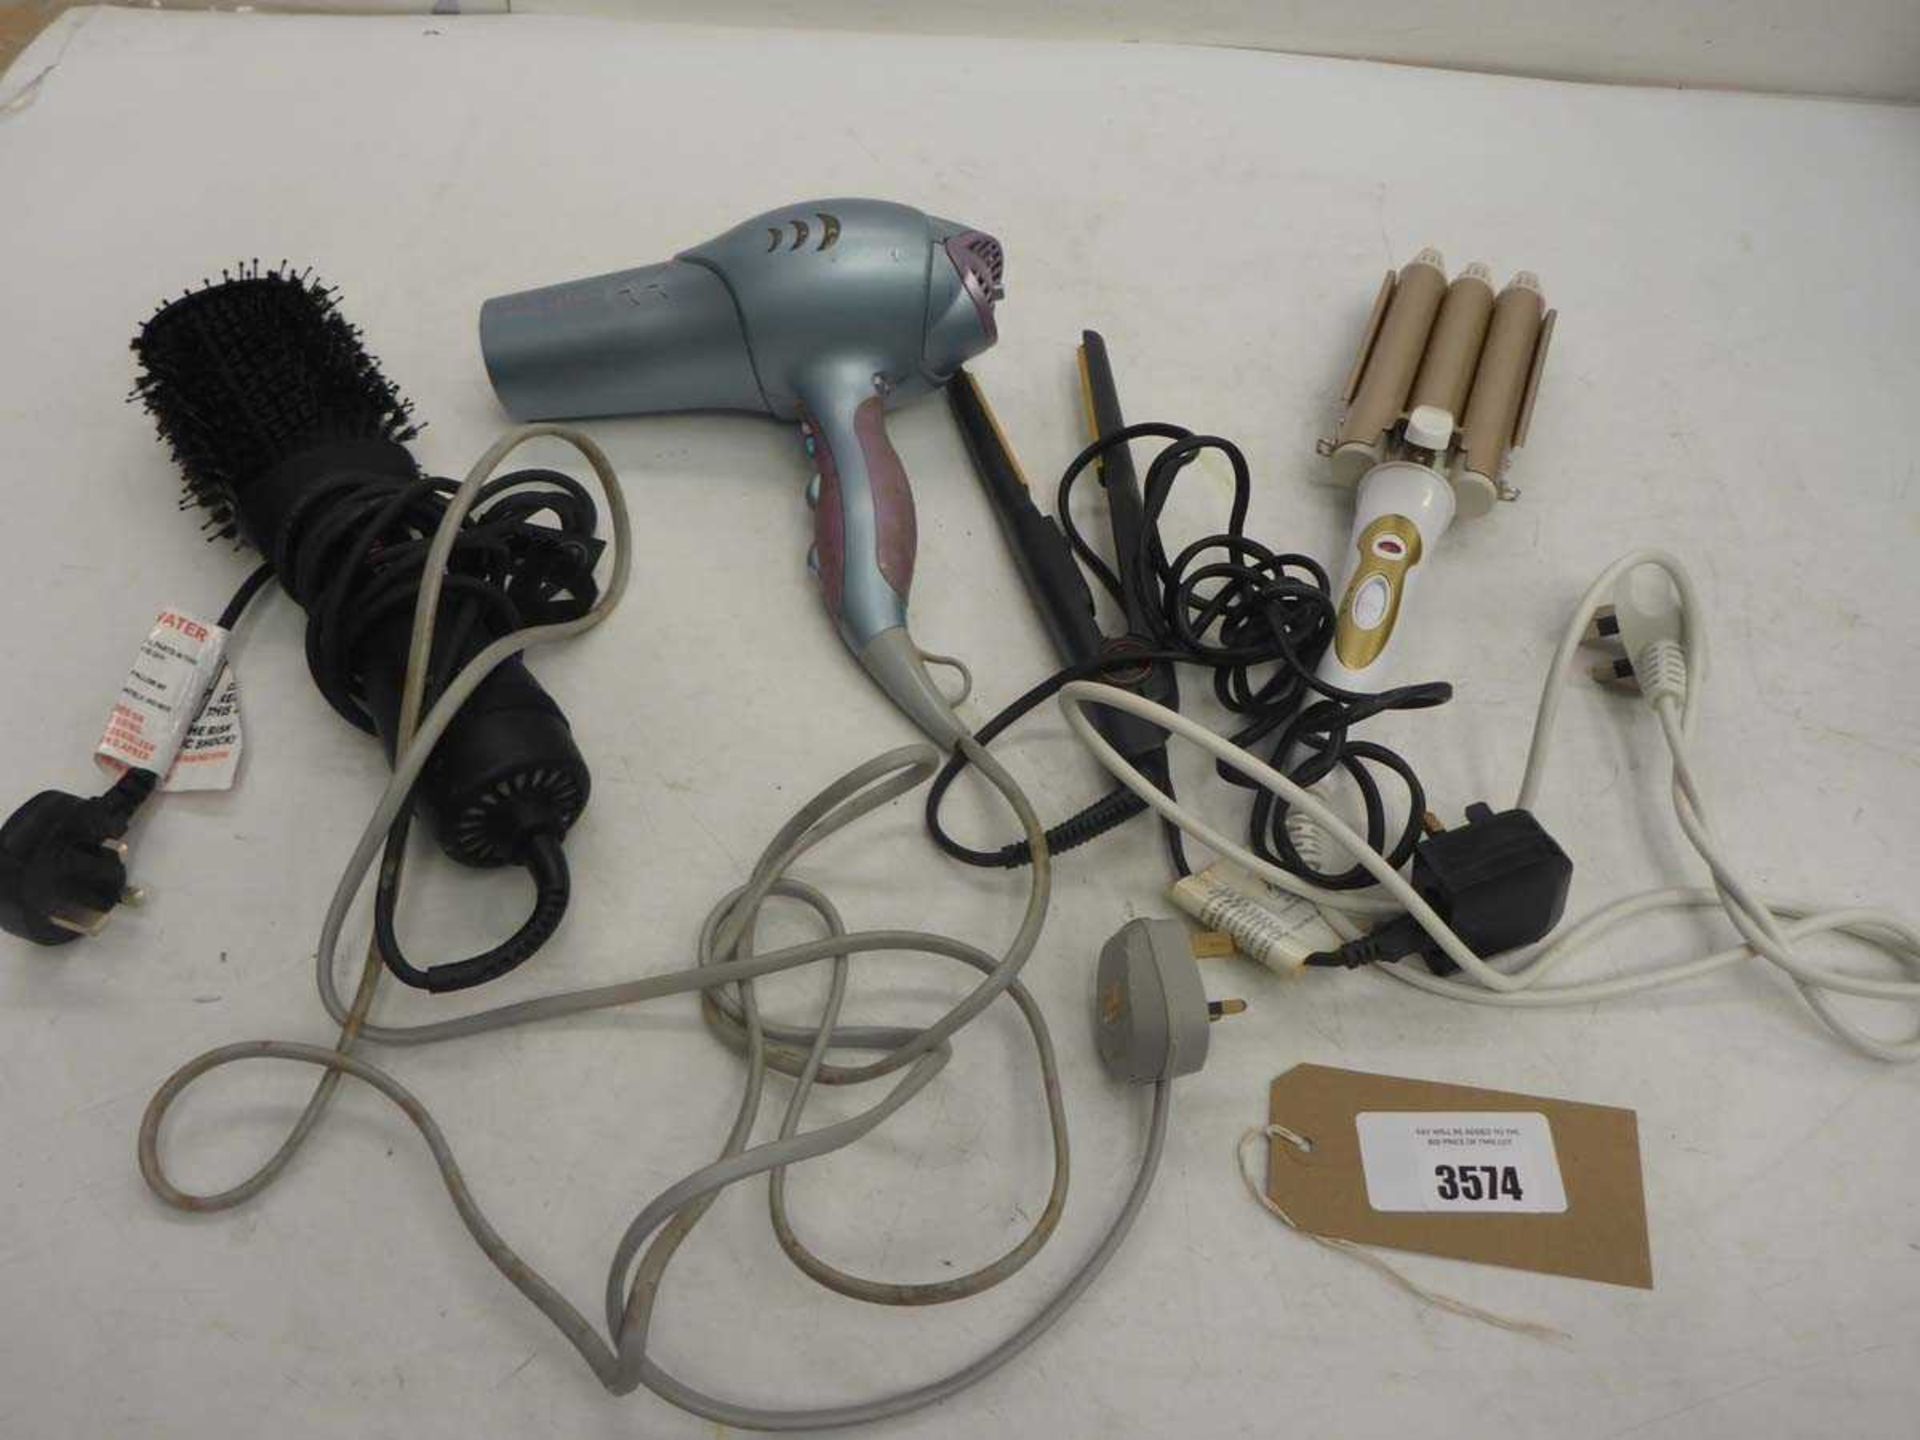 +VAT Heated hair brush, GHD straighteners, Hair curler and Vidal Sassoon hair dryer (all a/f -